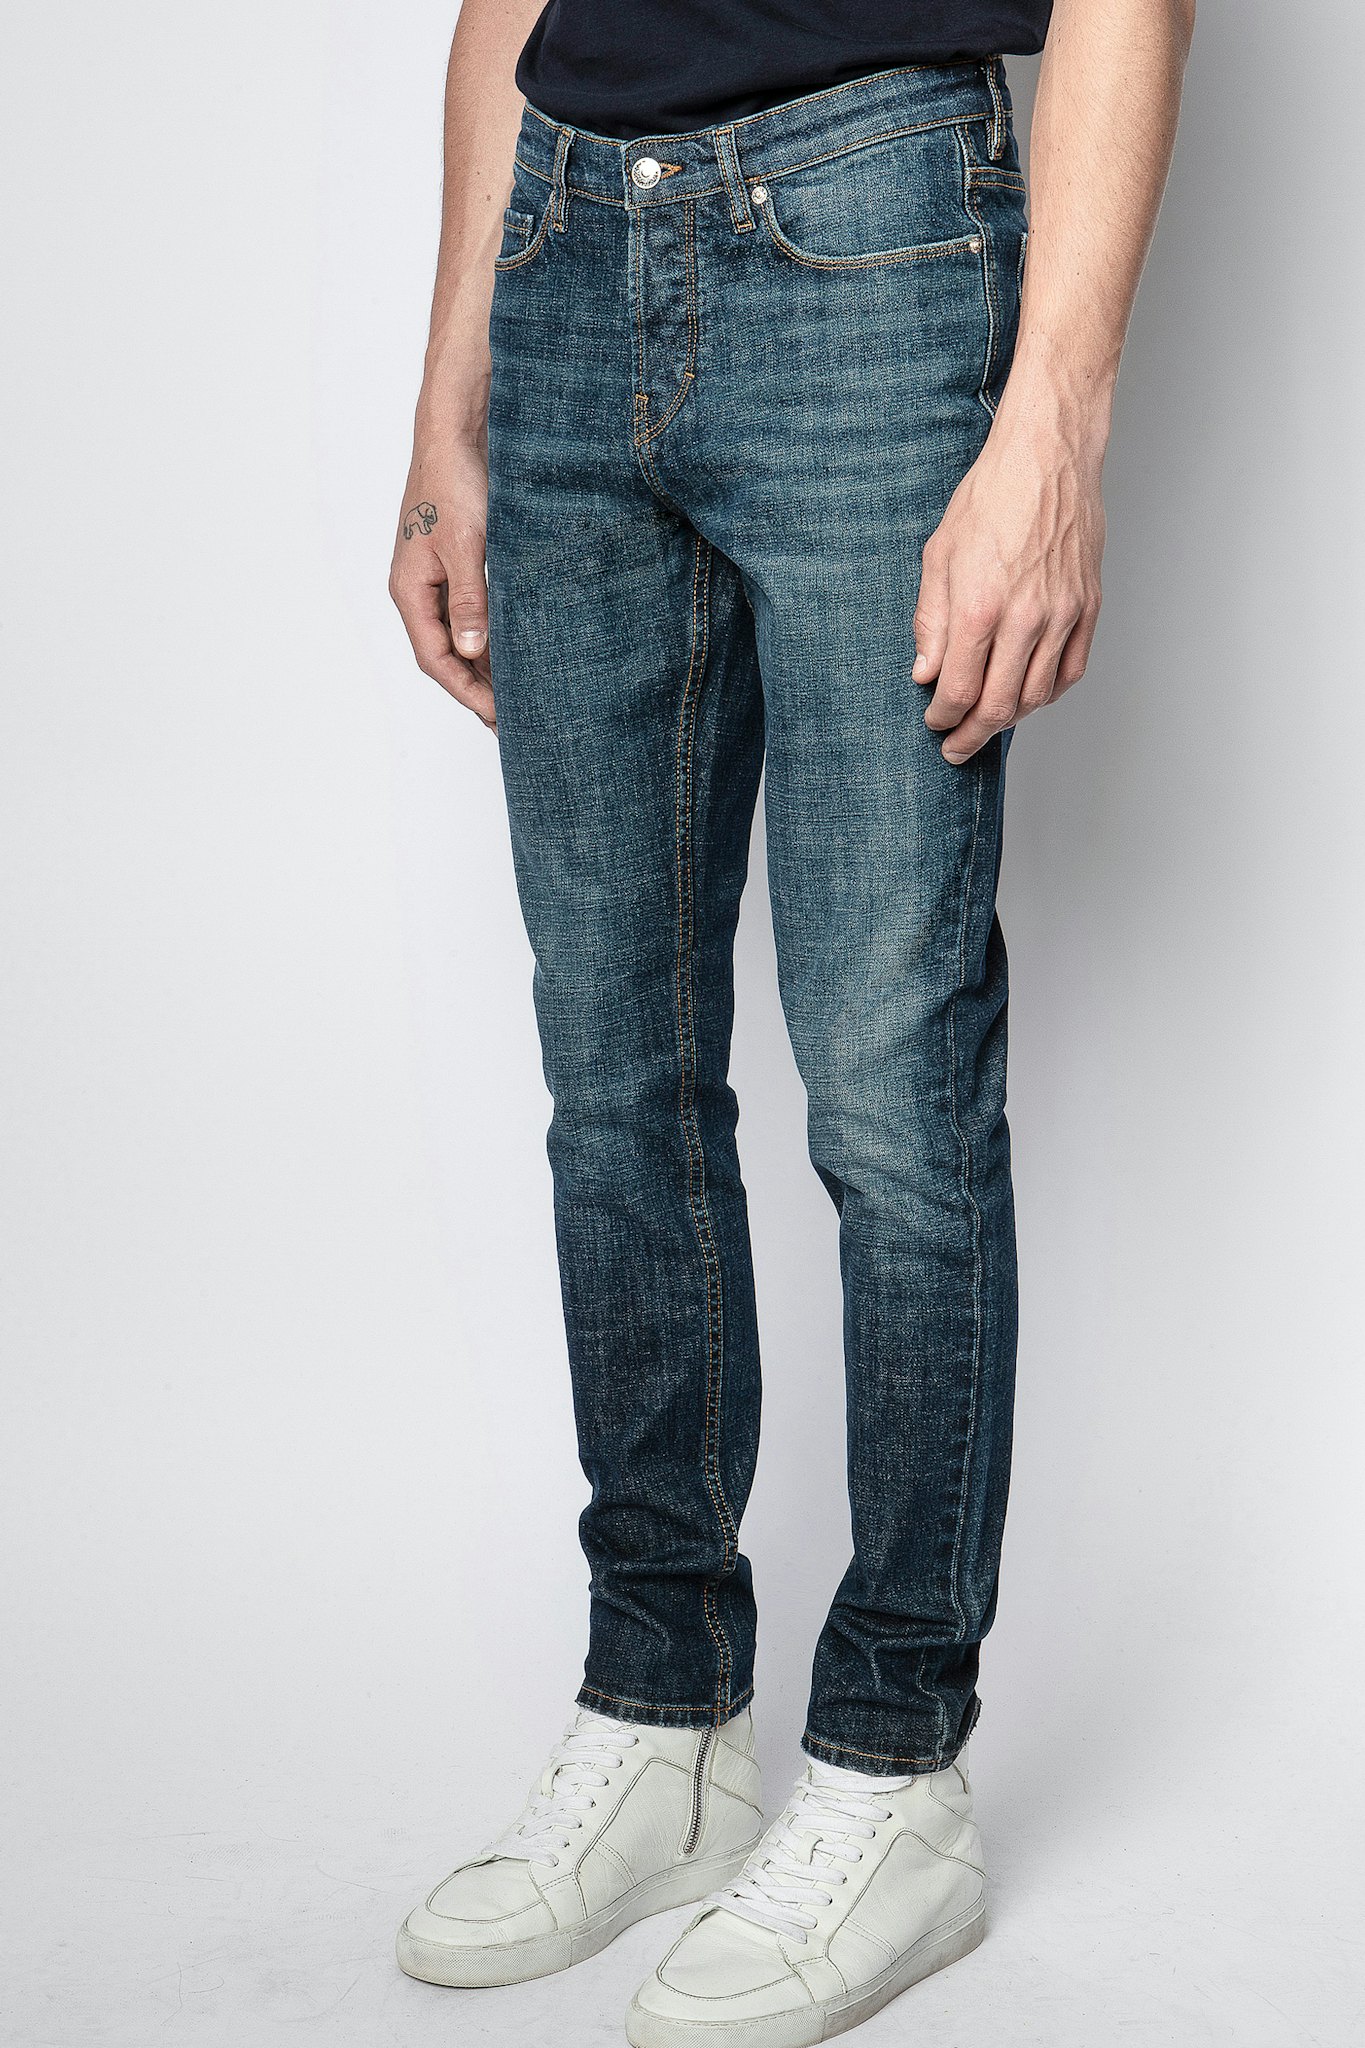 David Eco Brut Jeans